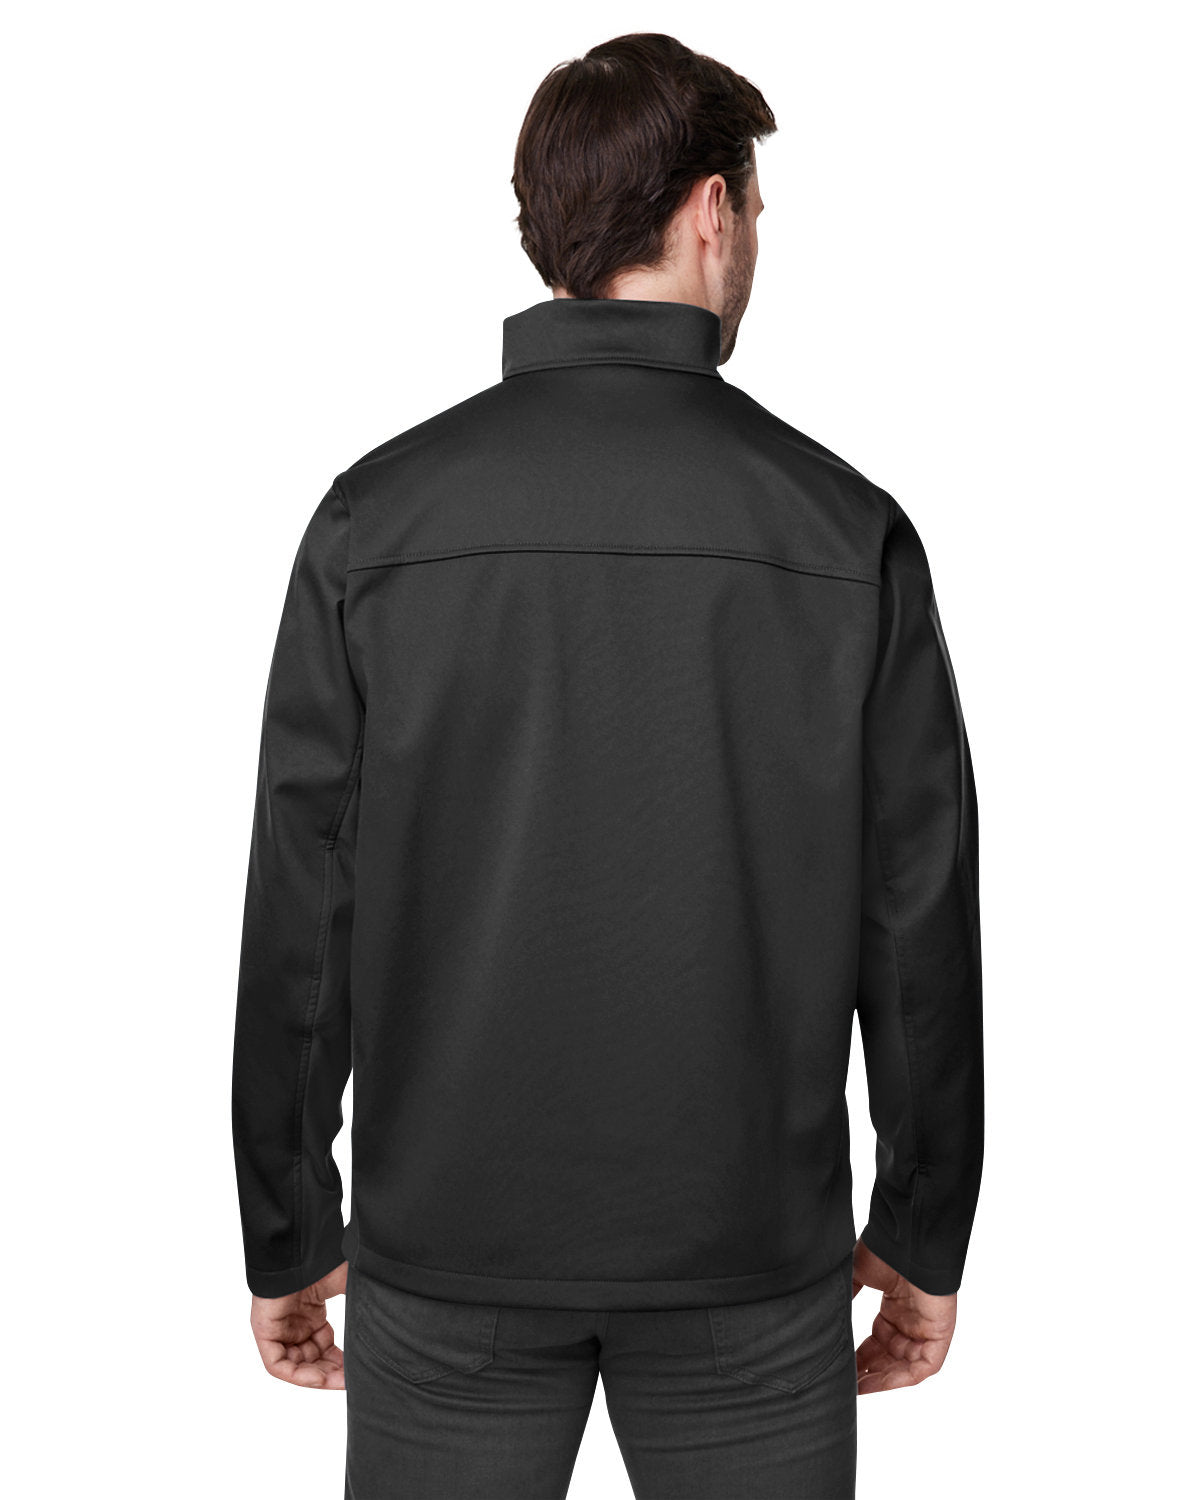 Branded Under Armour Men's ColdGear Infrared Shield 2.0 Jacket 1371586 Black  PTC Grey